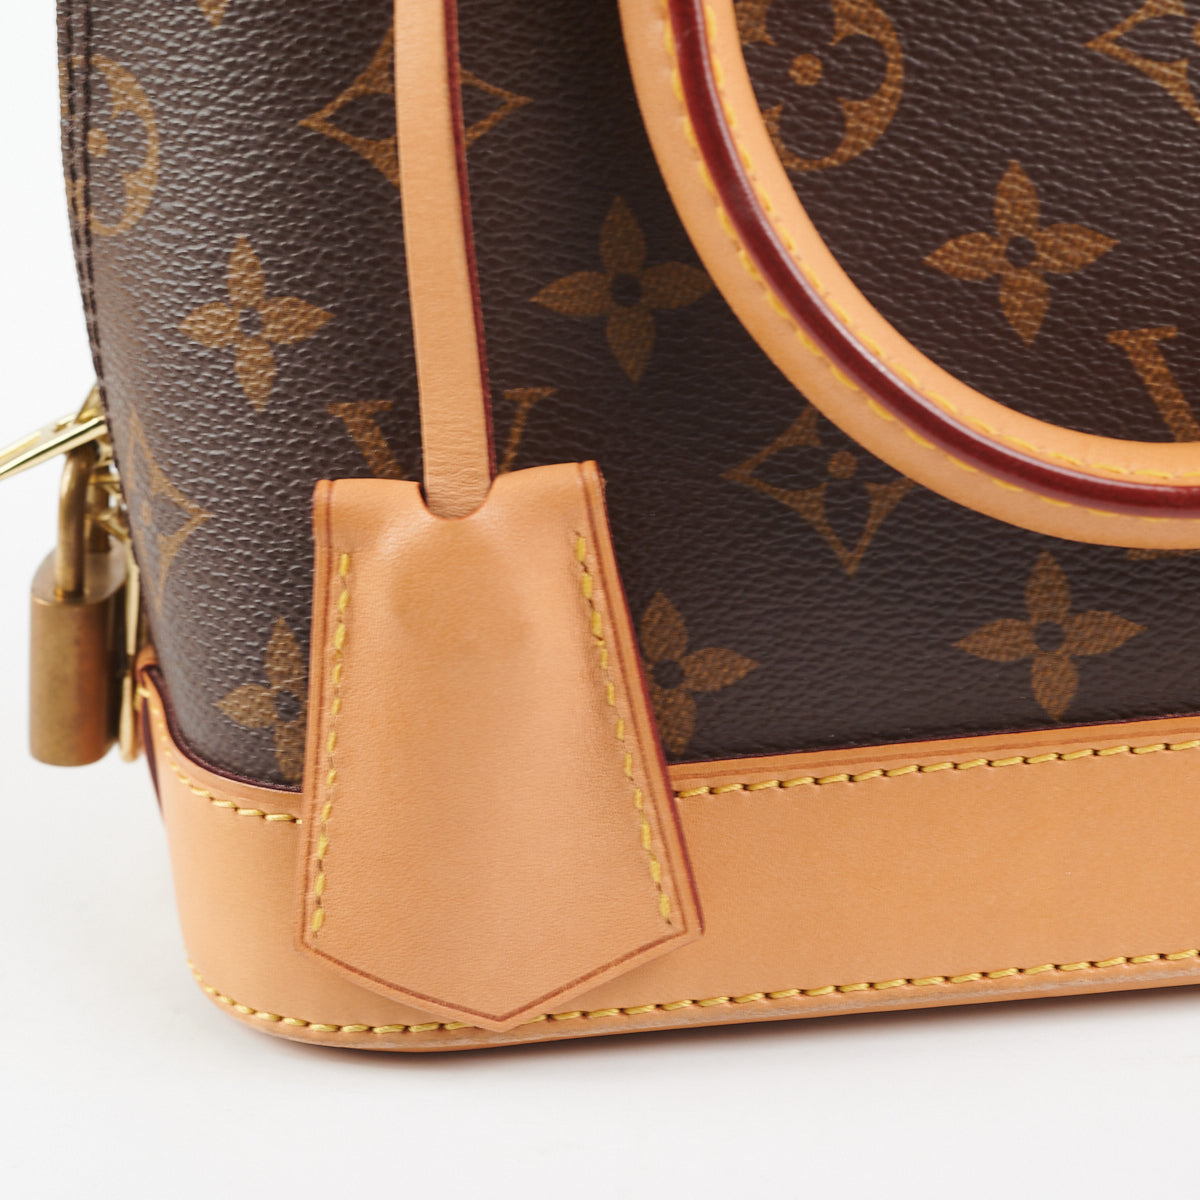 Louis Vuitton Alma BB Monogram Canvas Handbag - SehaBags